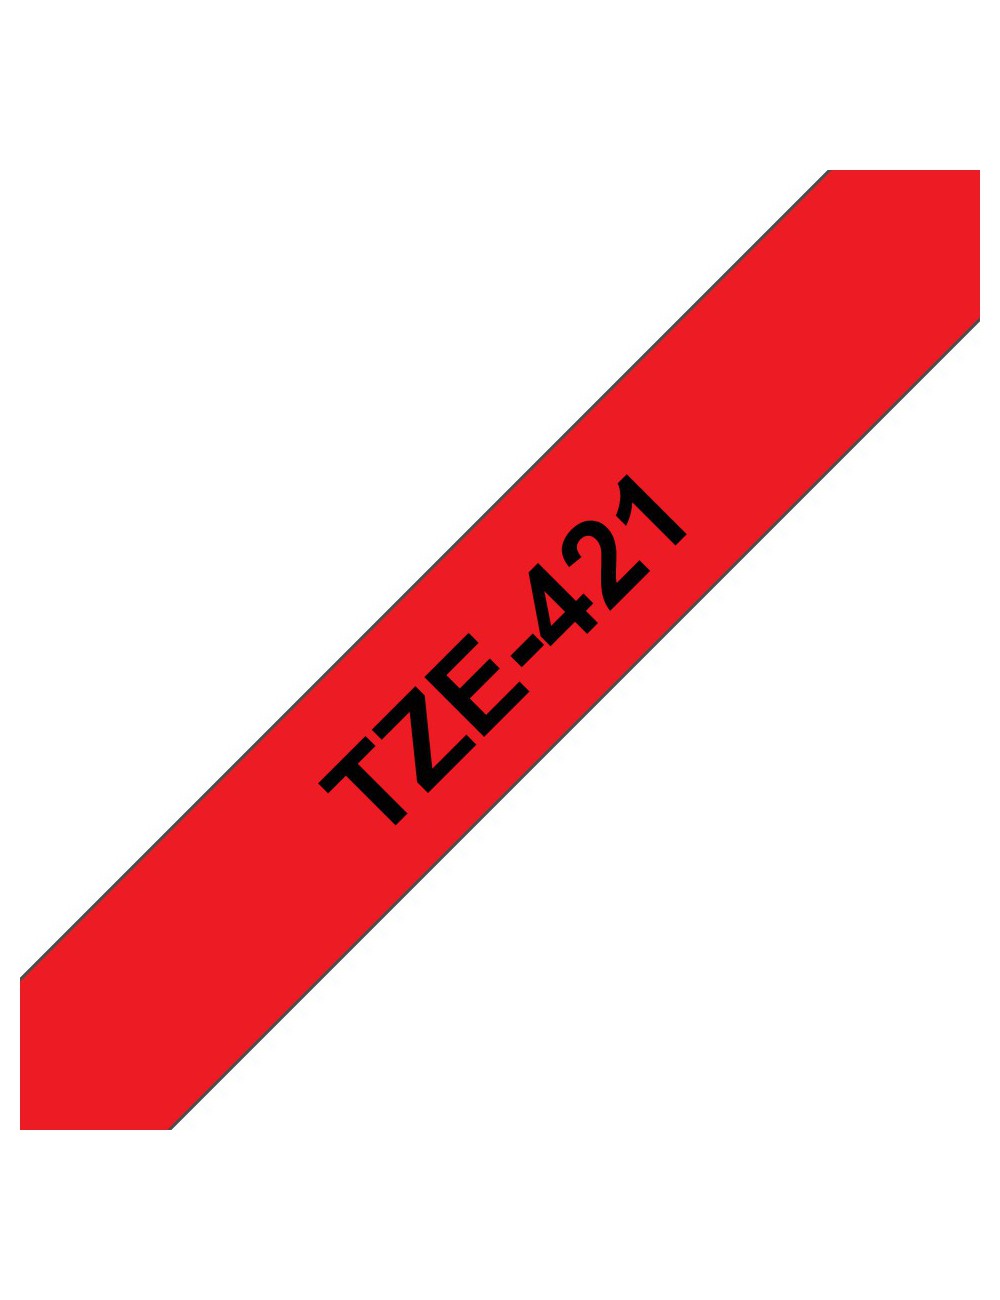 Brother TZE-421 cinta para impresora de etiquetas Negro sobre rojo